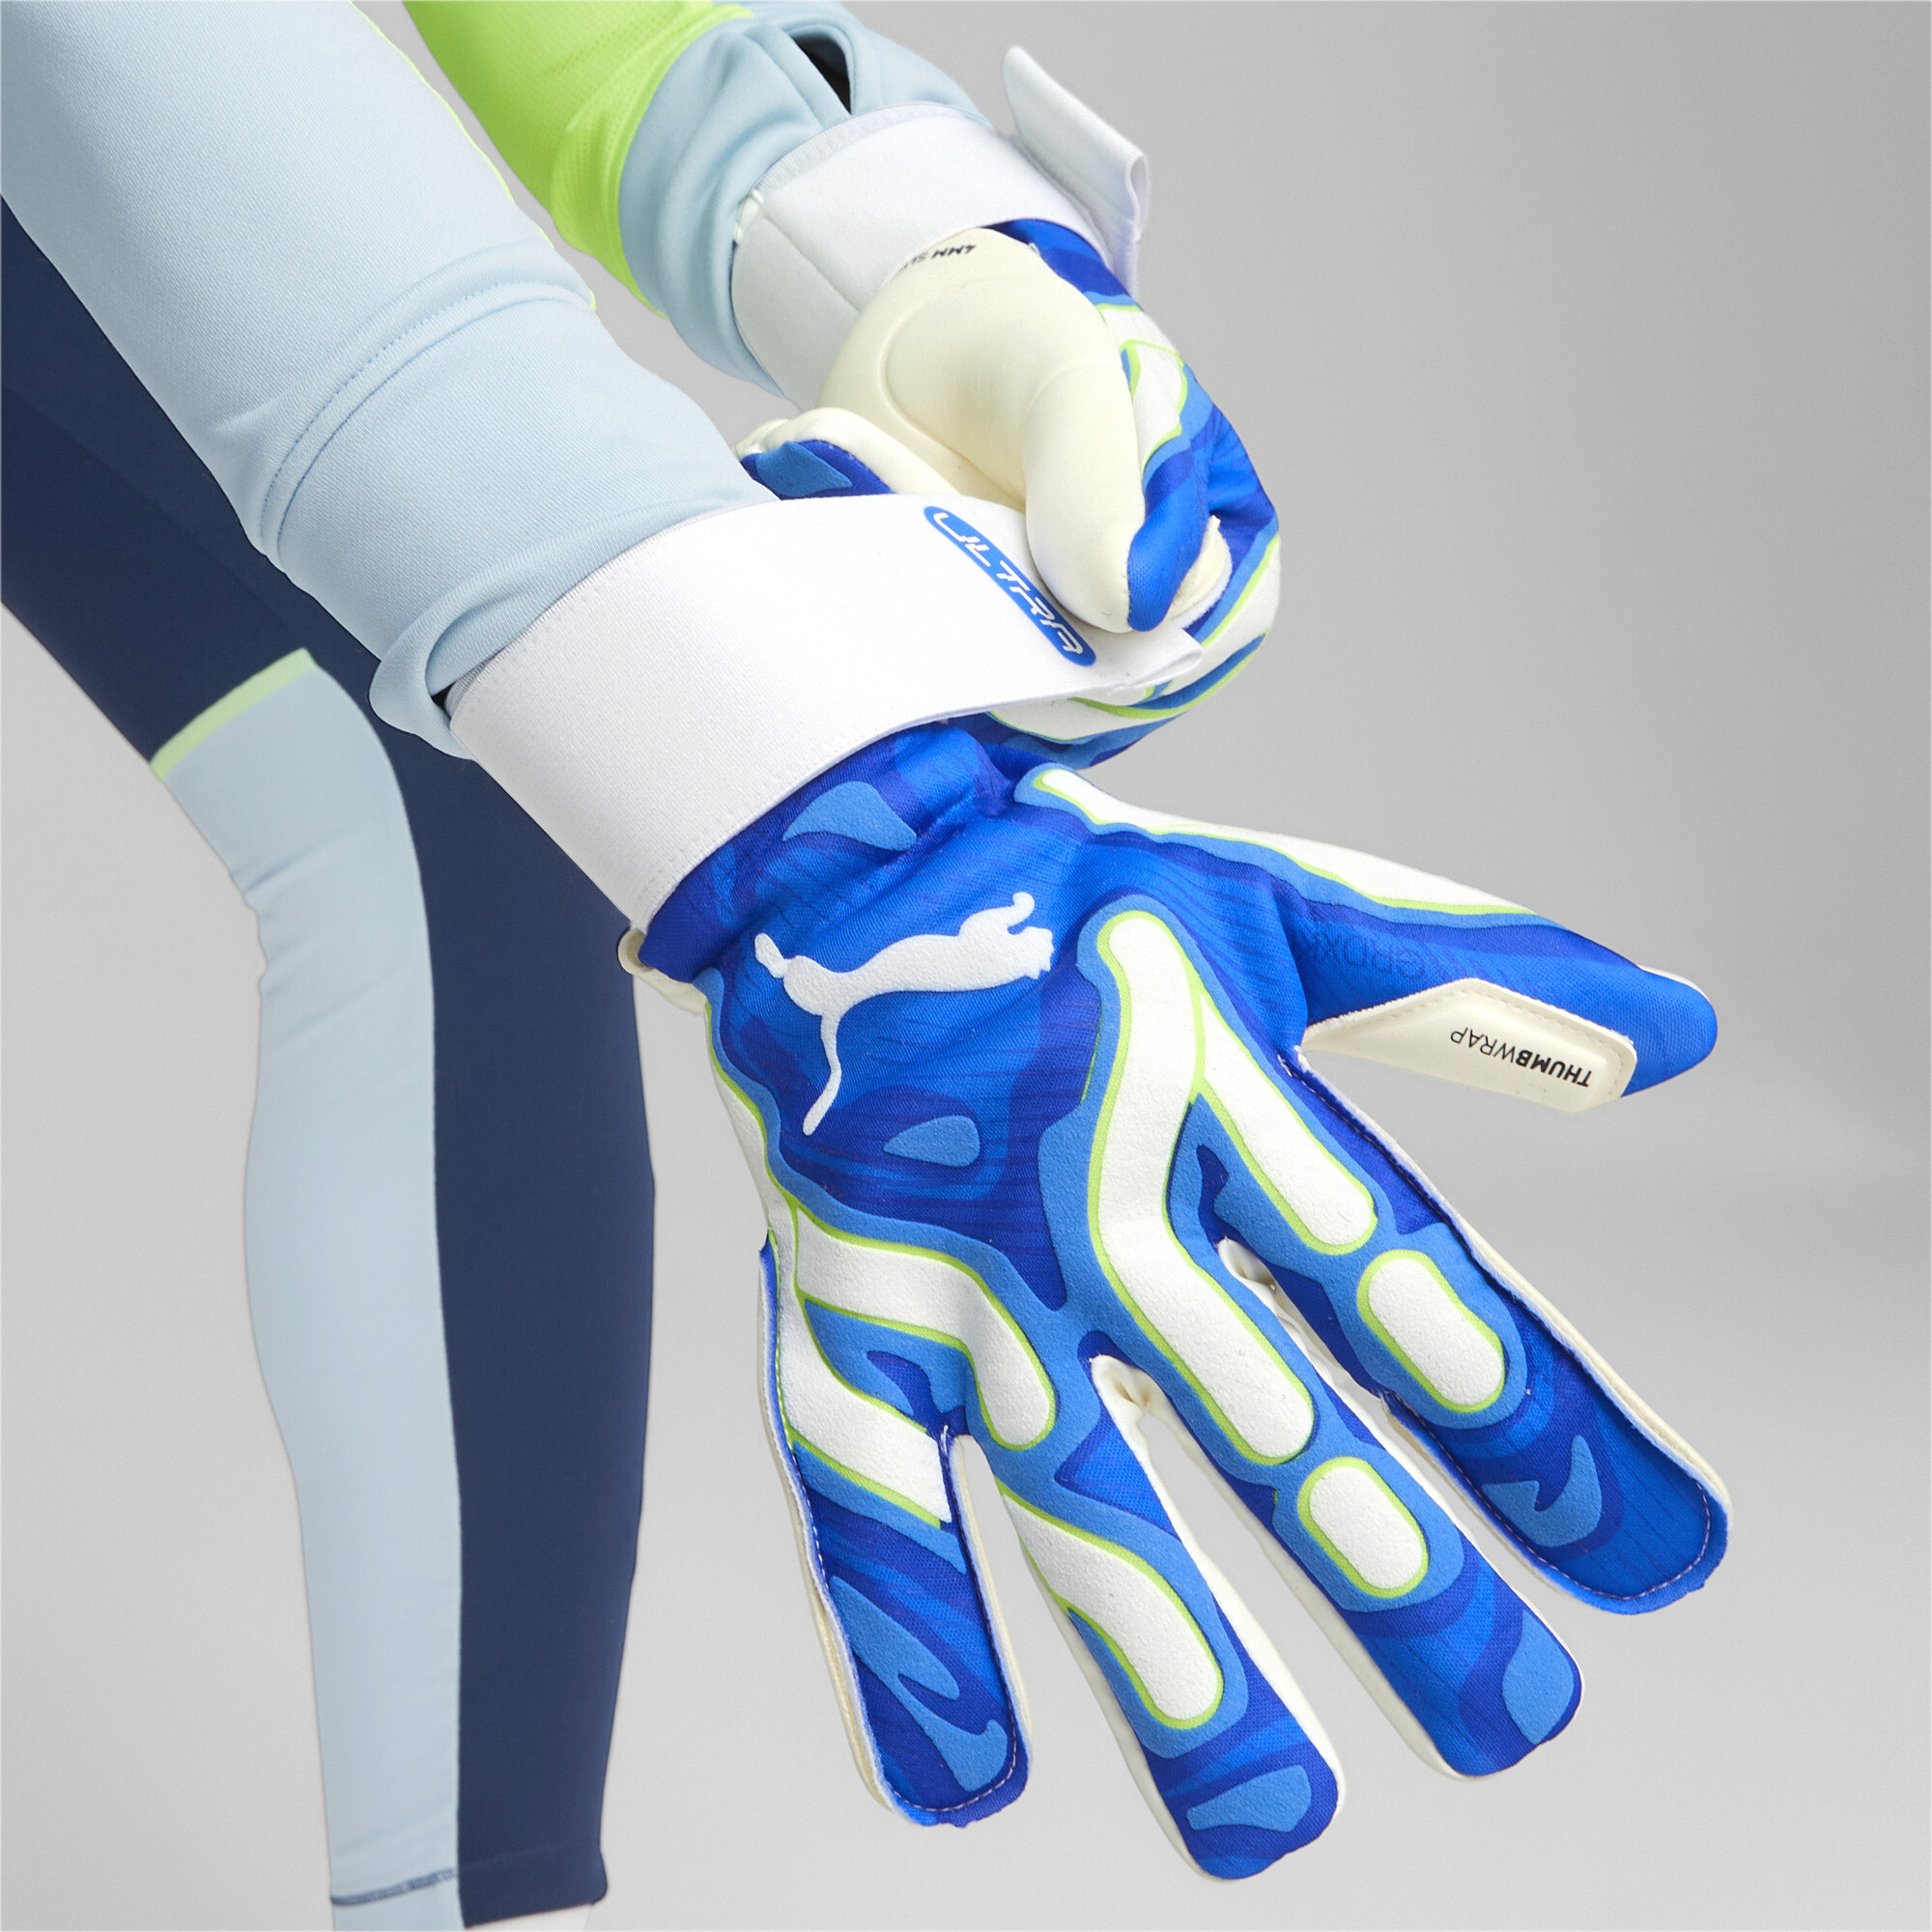 Puma ULTRA Ultimate Hybrid Goalkeeper Gloves, Blue, Size 10.5, Accessories